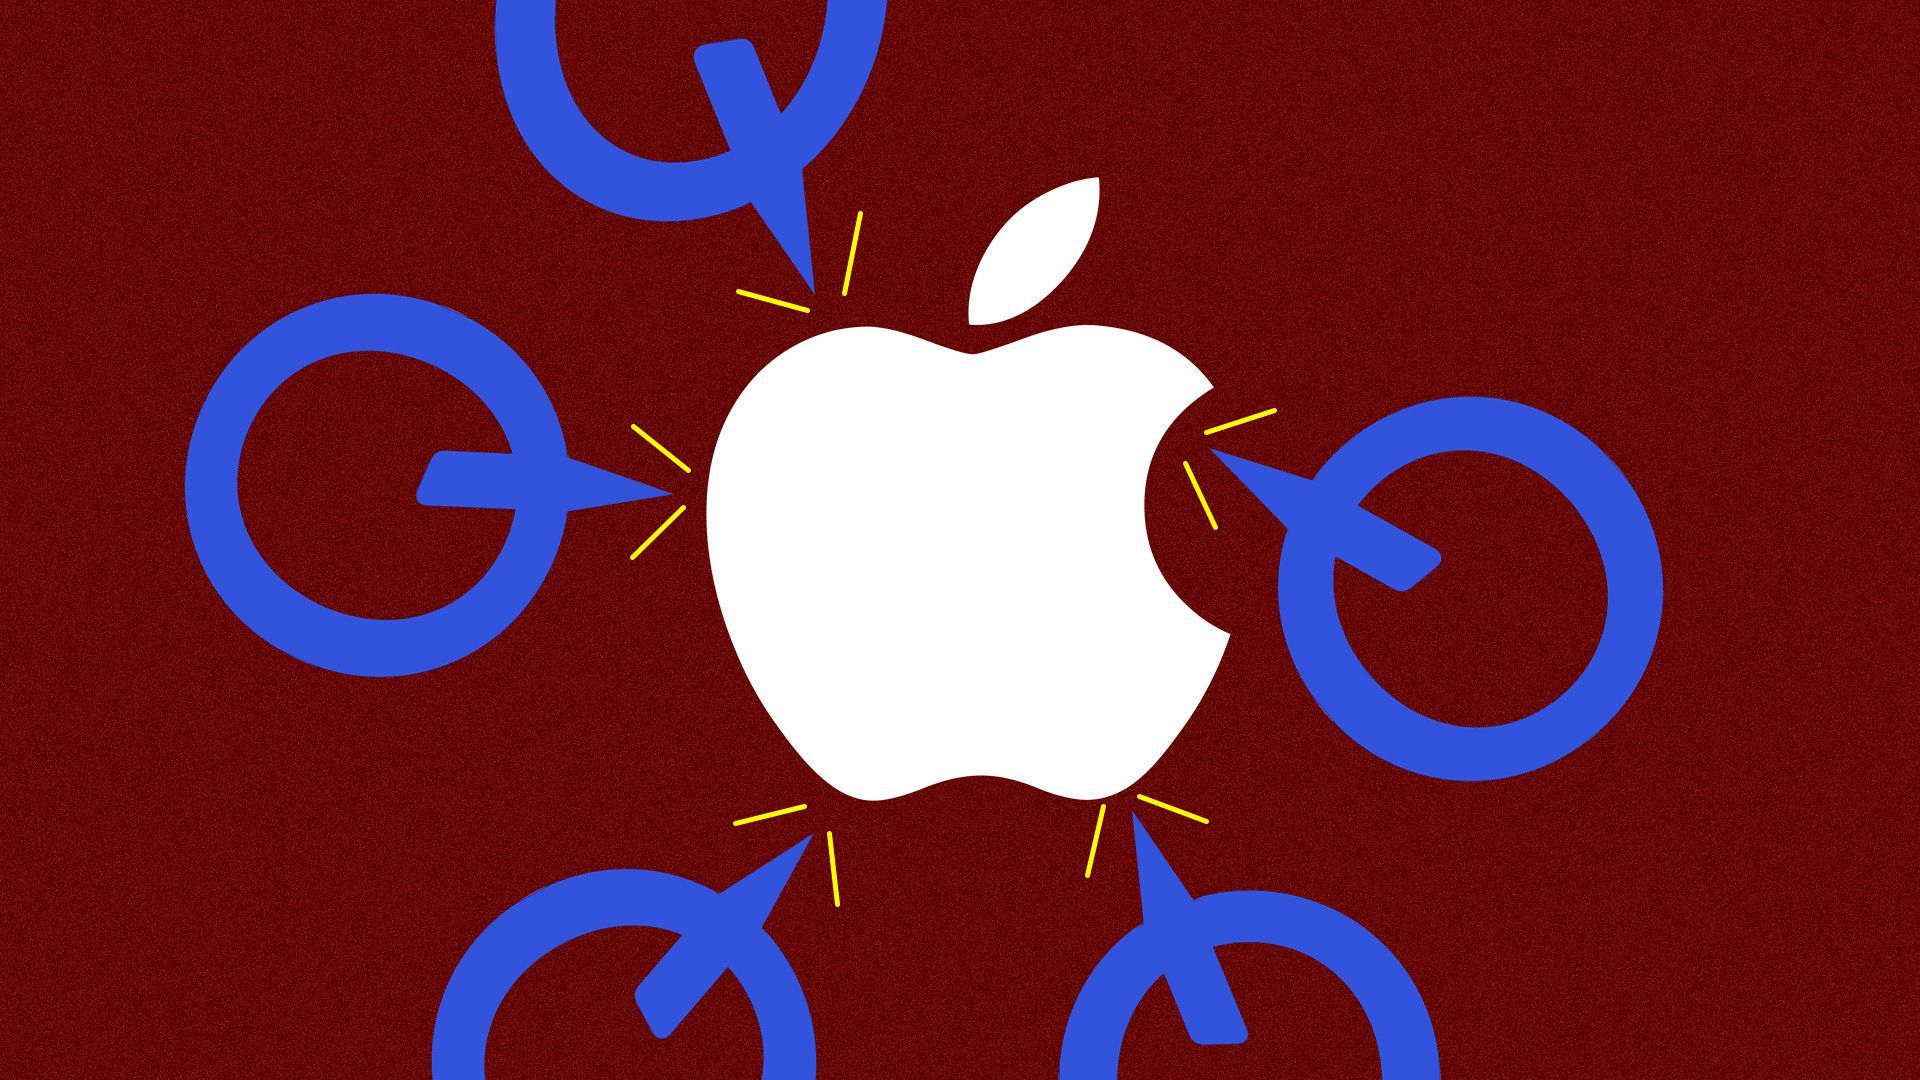 Illustration of Qualcomm symbols attacking the Apple symbol